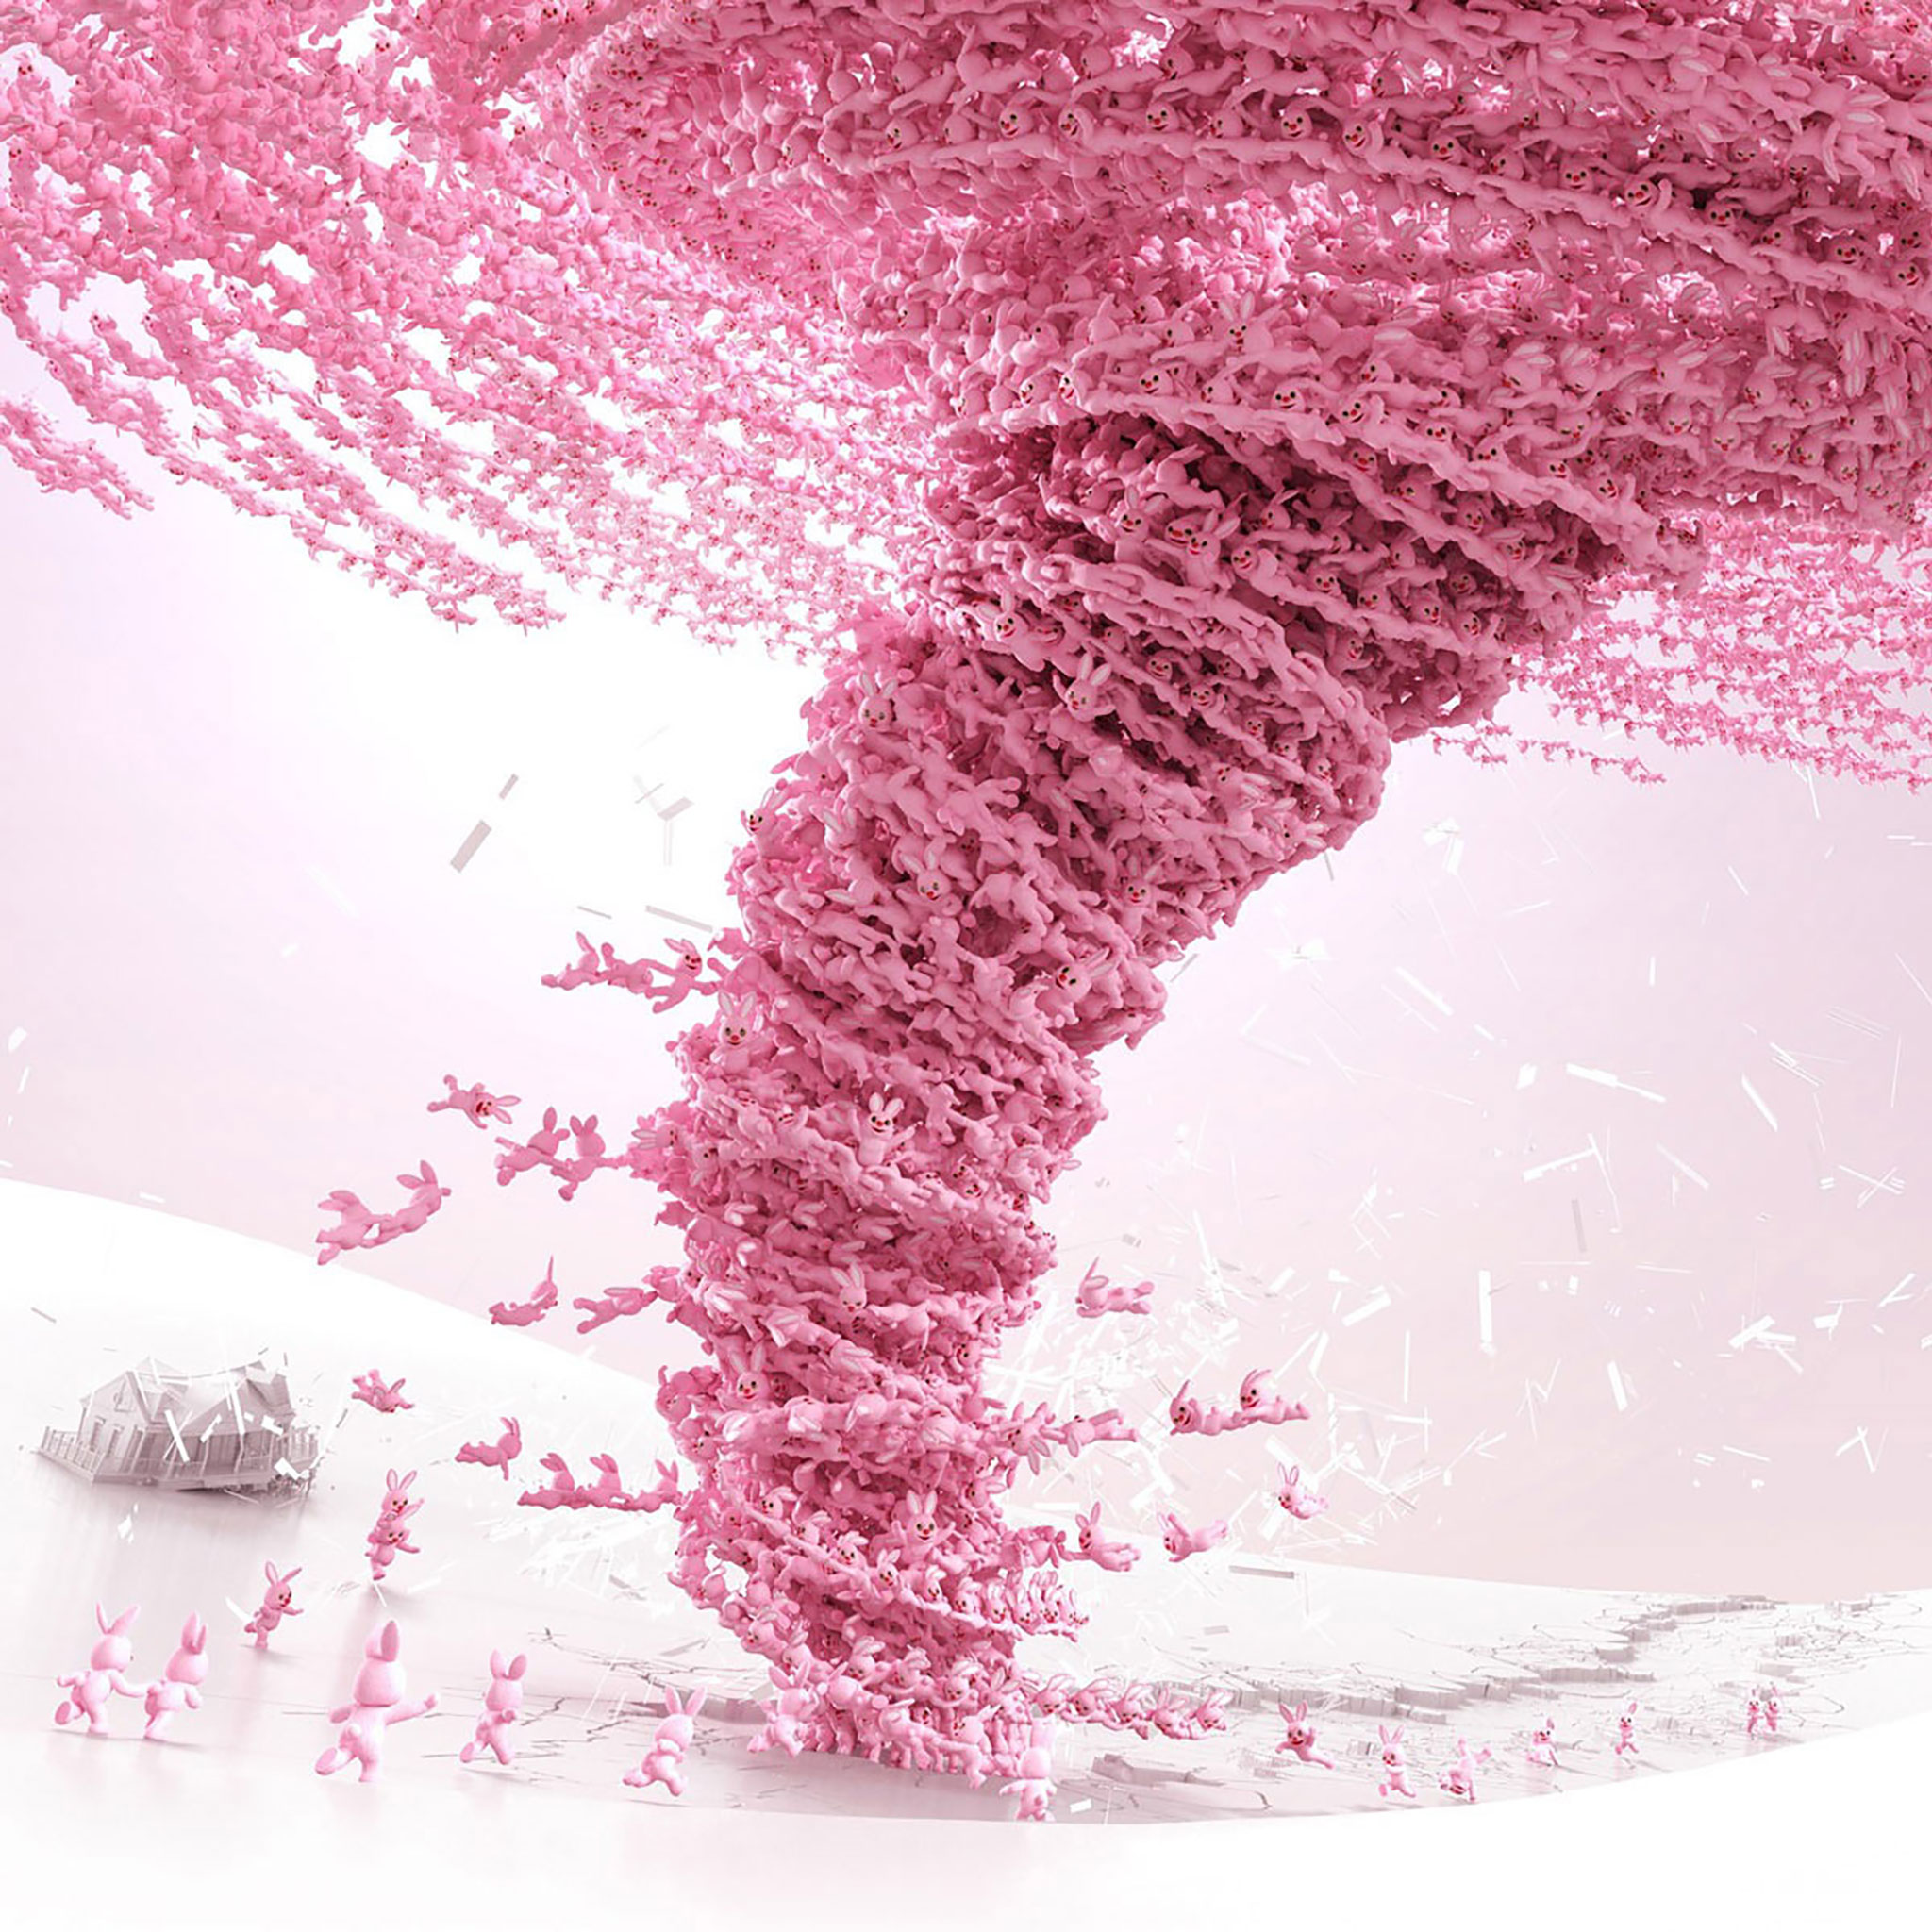 Aesthetic Ipad Pink Wallpapers